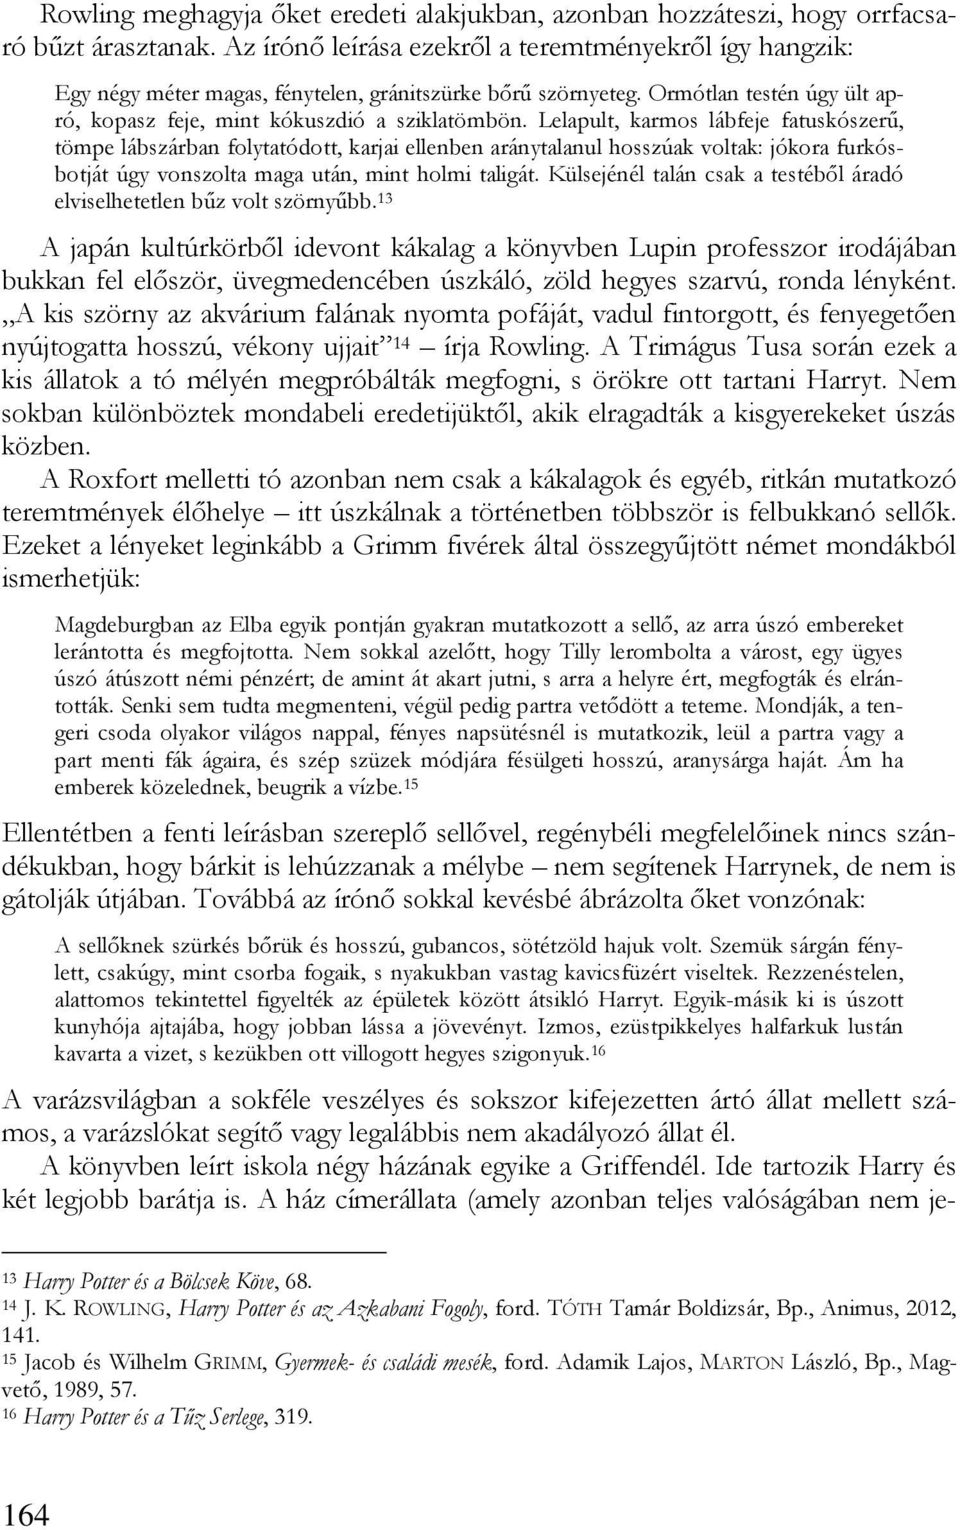 harry potter azkabani fogoly pdf 37